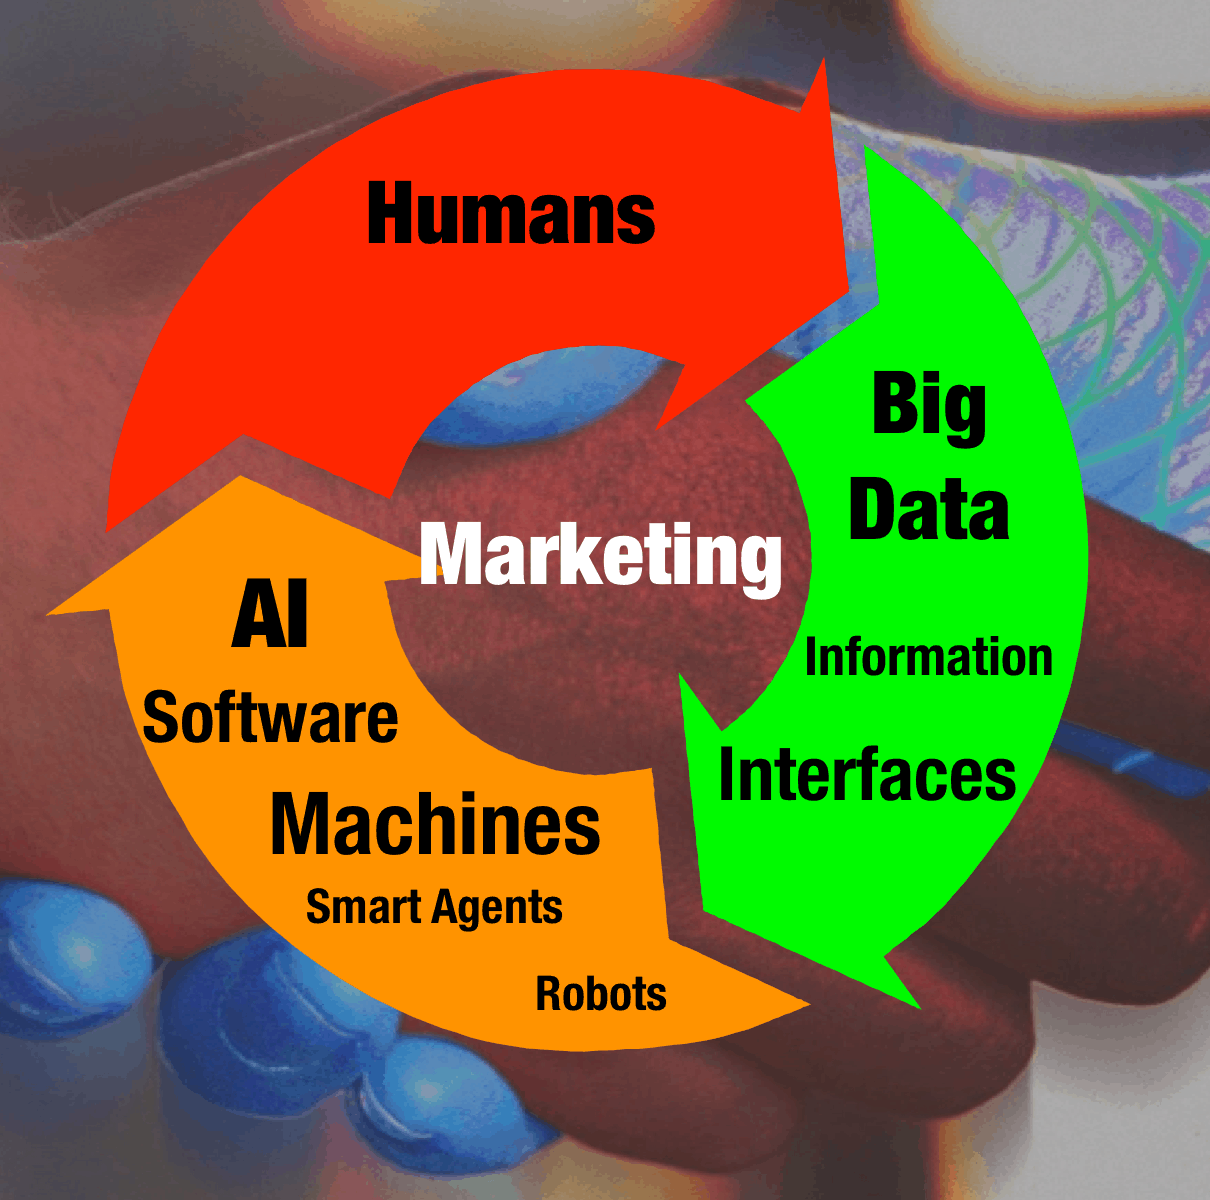 humans-marketing-big-data-gerd